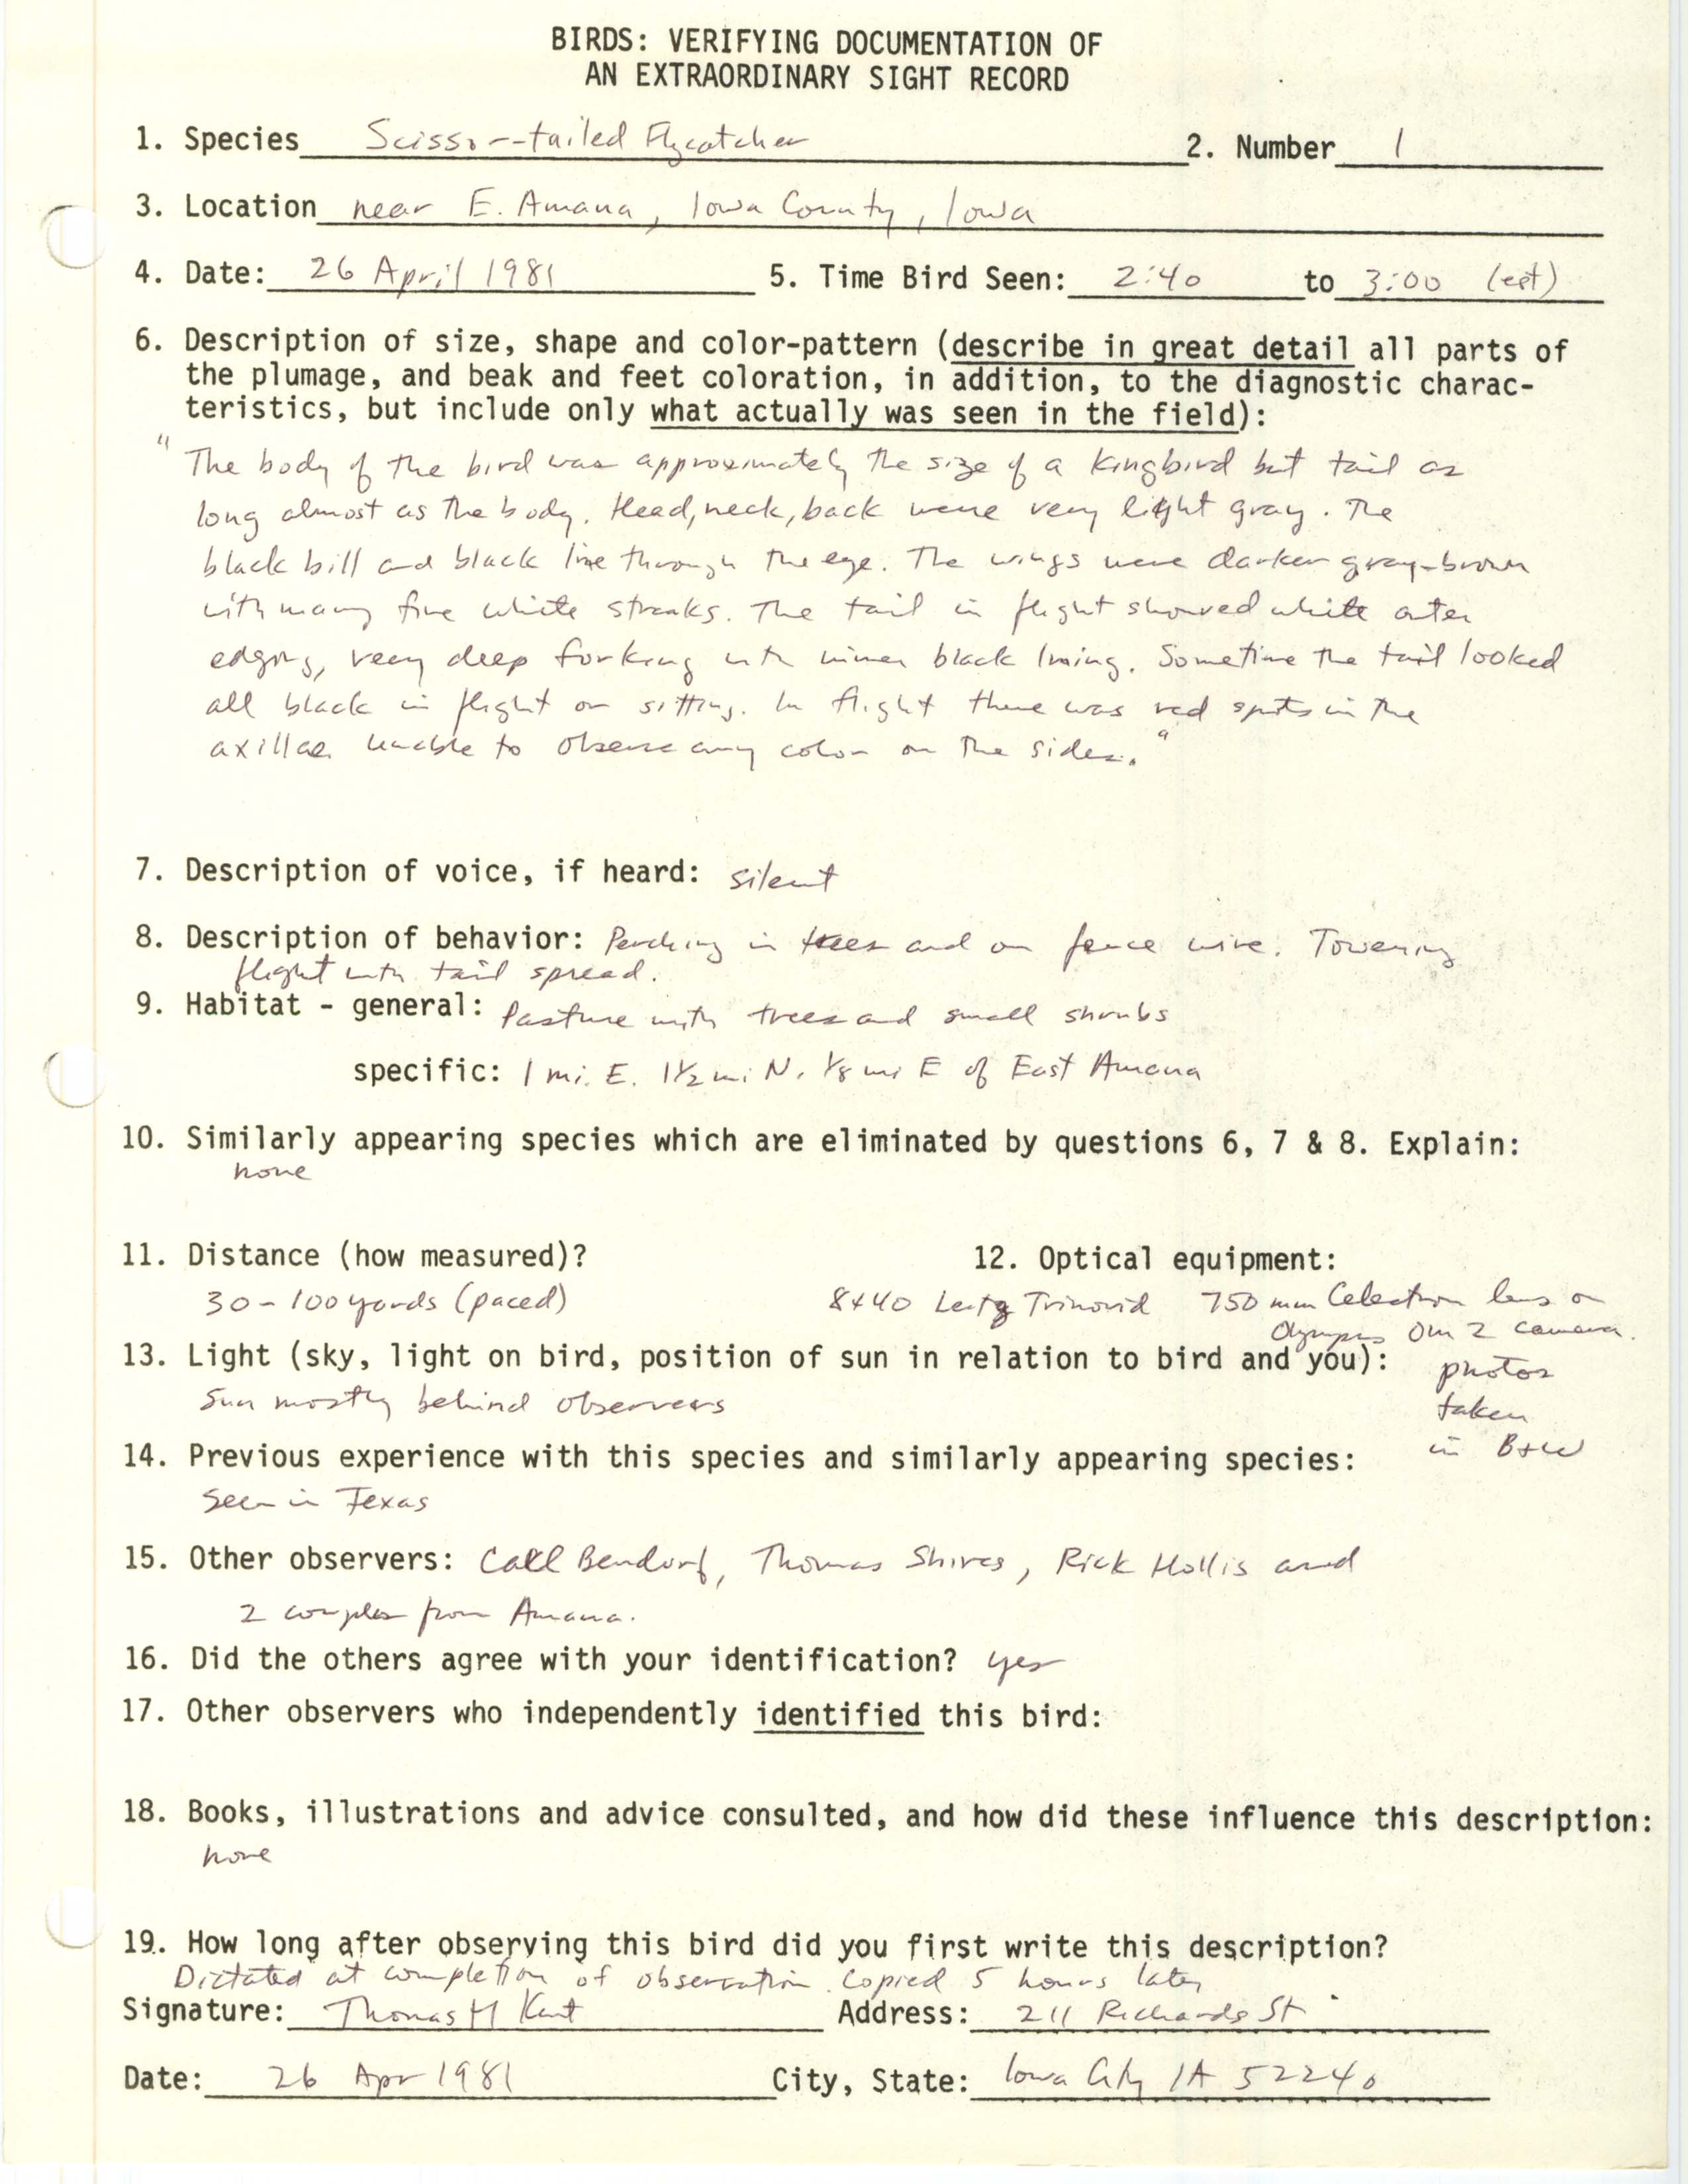 Rare bird documentation form for Scissor-tailed Flycatcher near East Amana, 1981